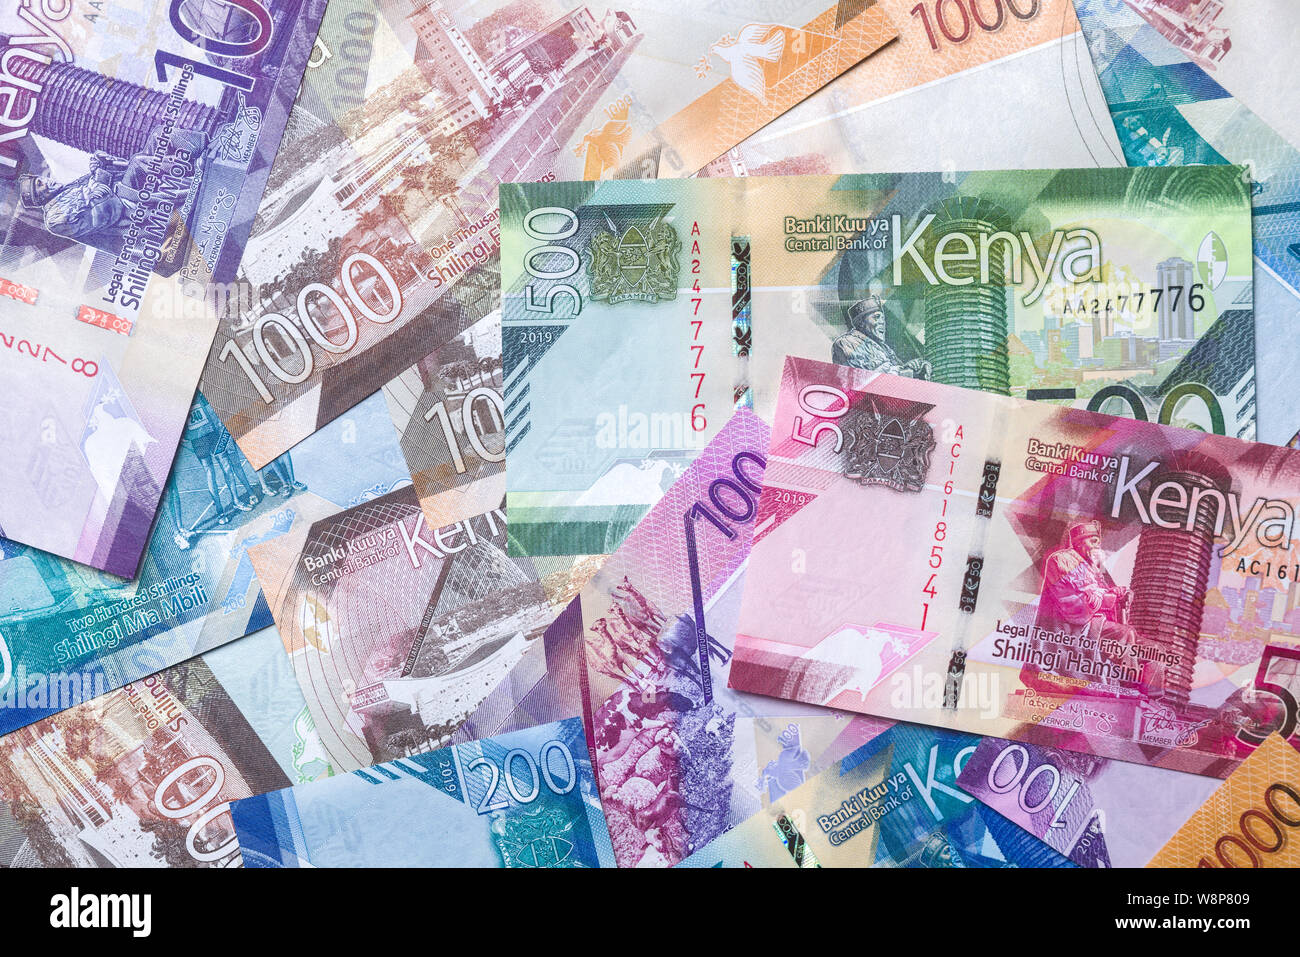 New 2019 Kenyan Shilling bank notes in various denominations Stock Photo